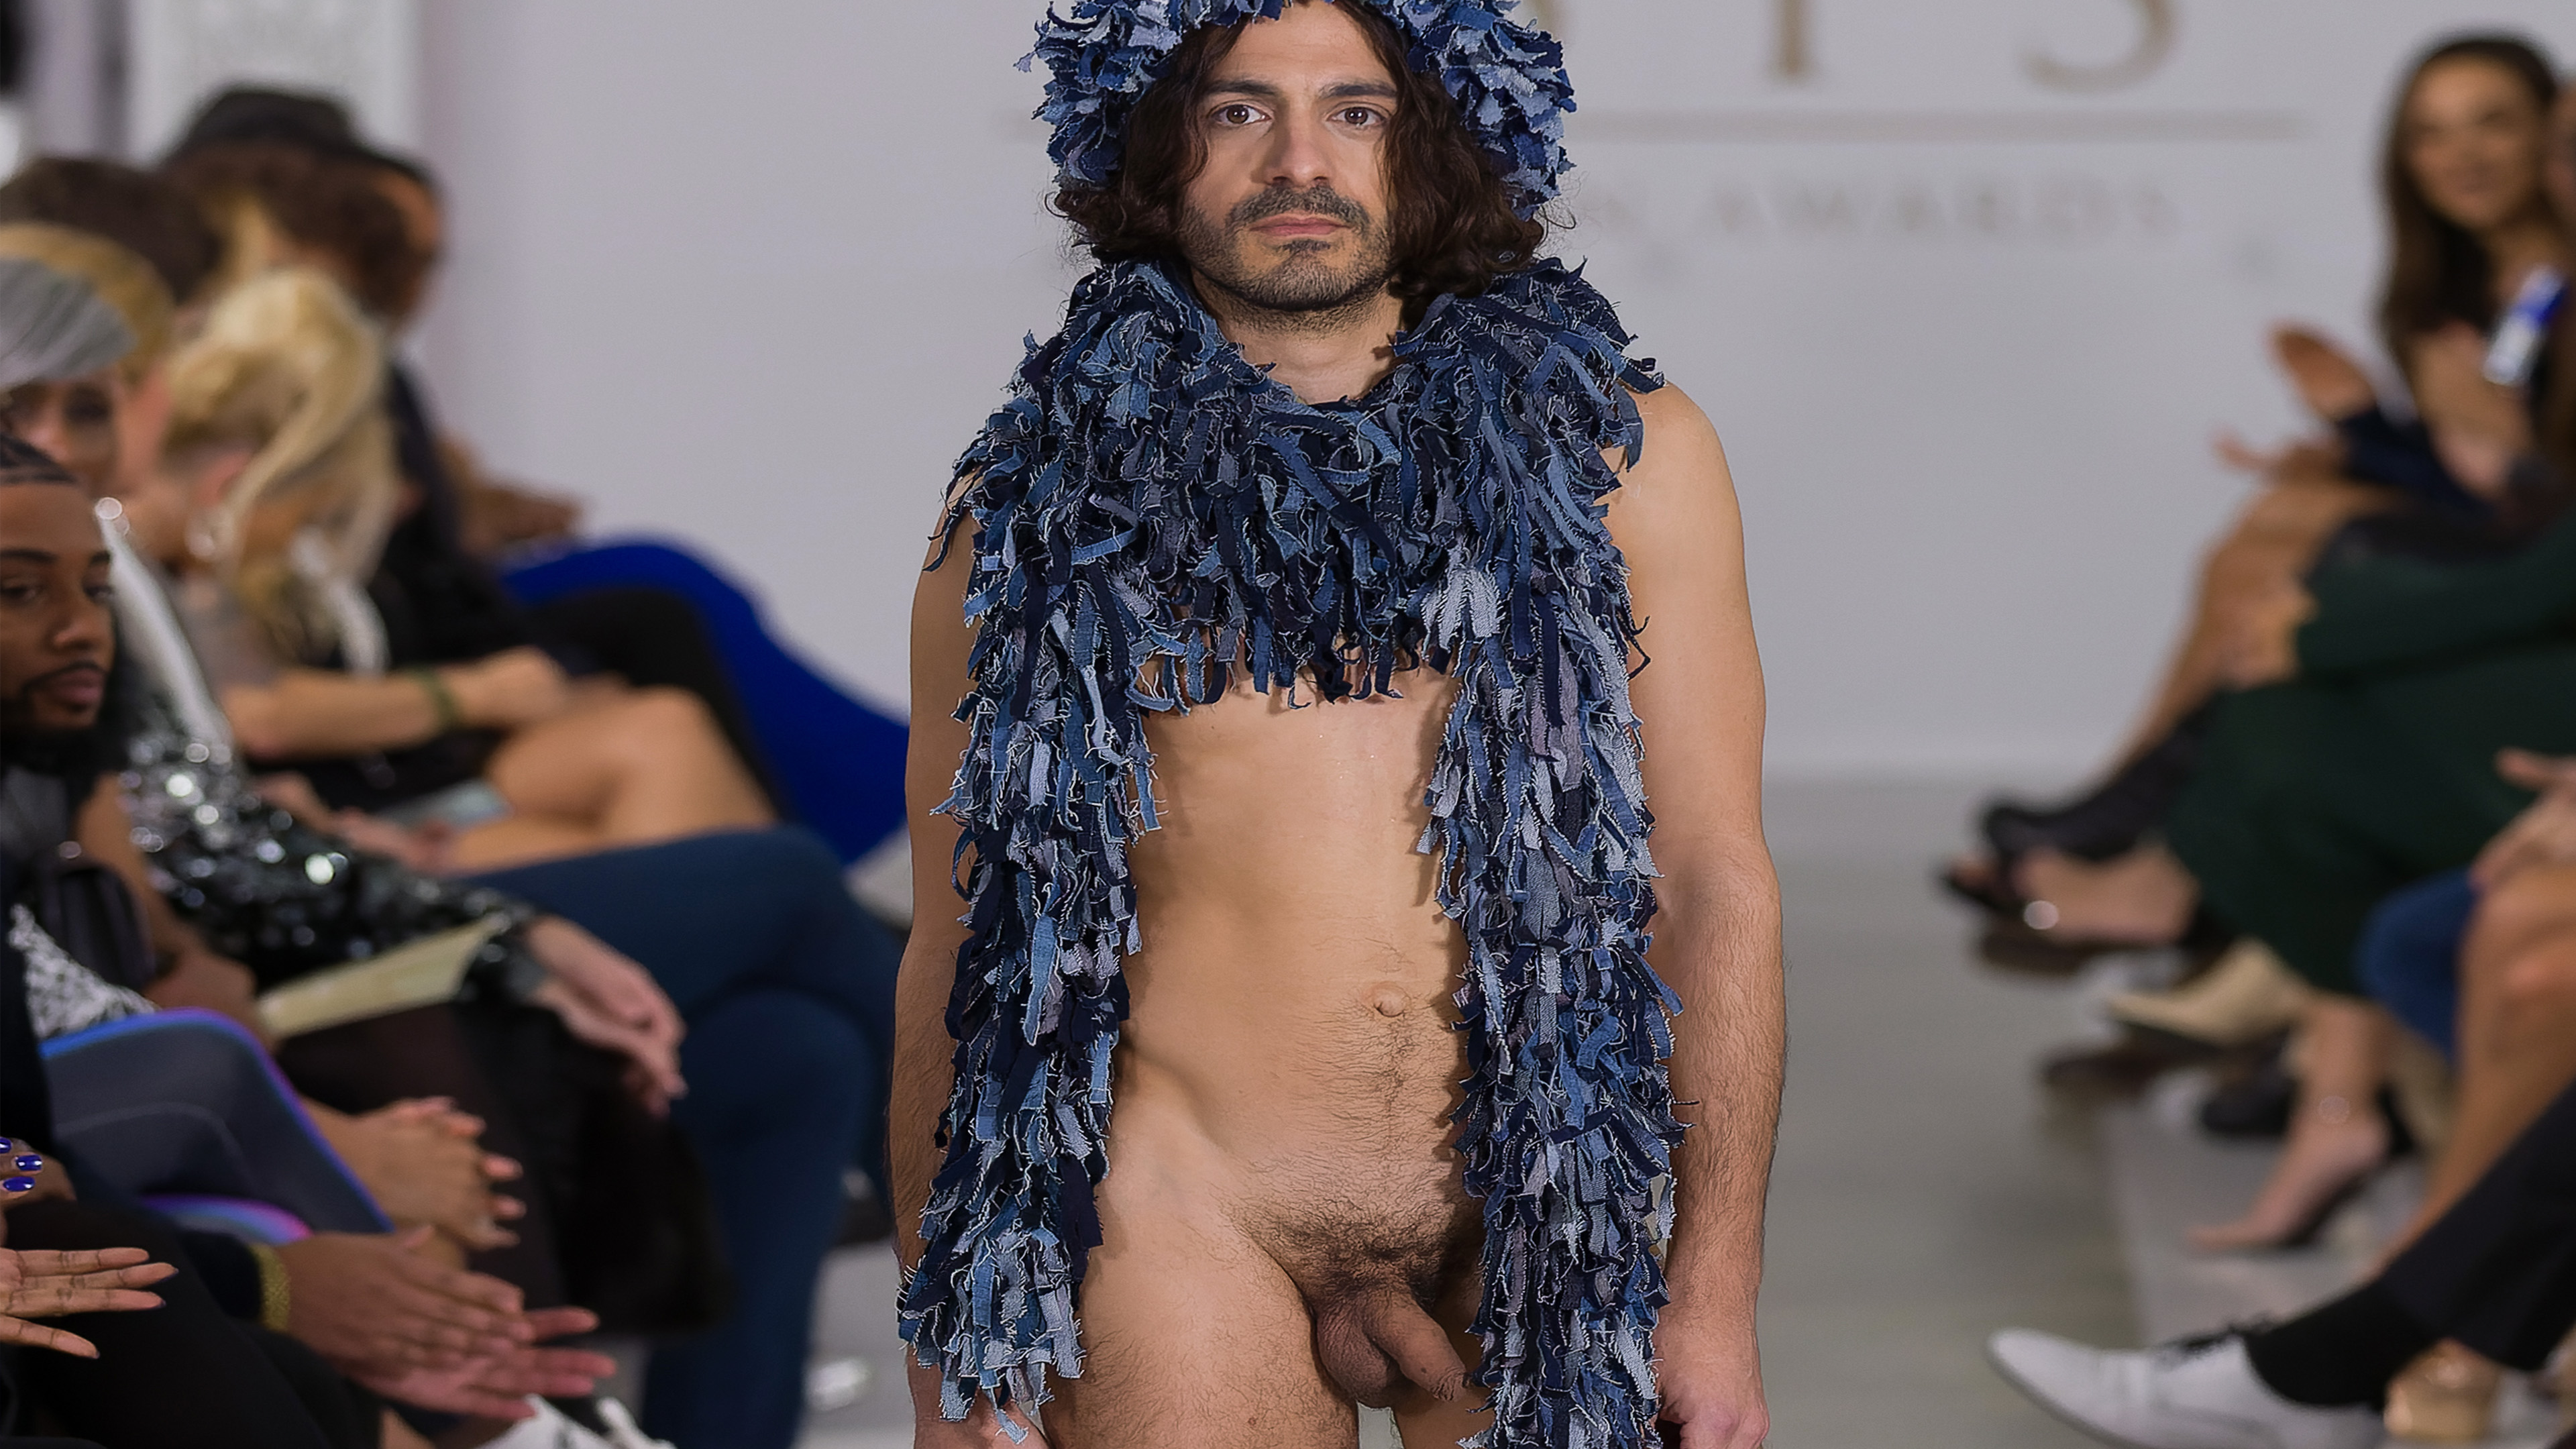 Nude Male Model at Dutch Fashion Show - Catwalk Runway